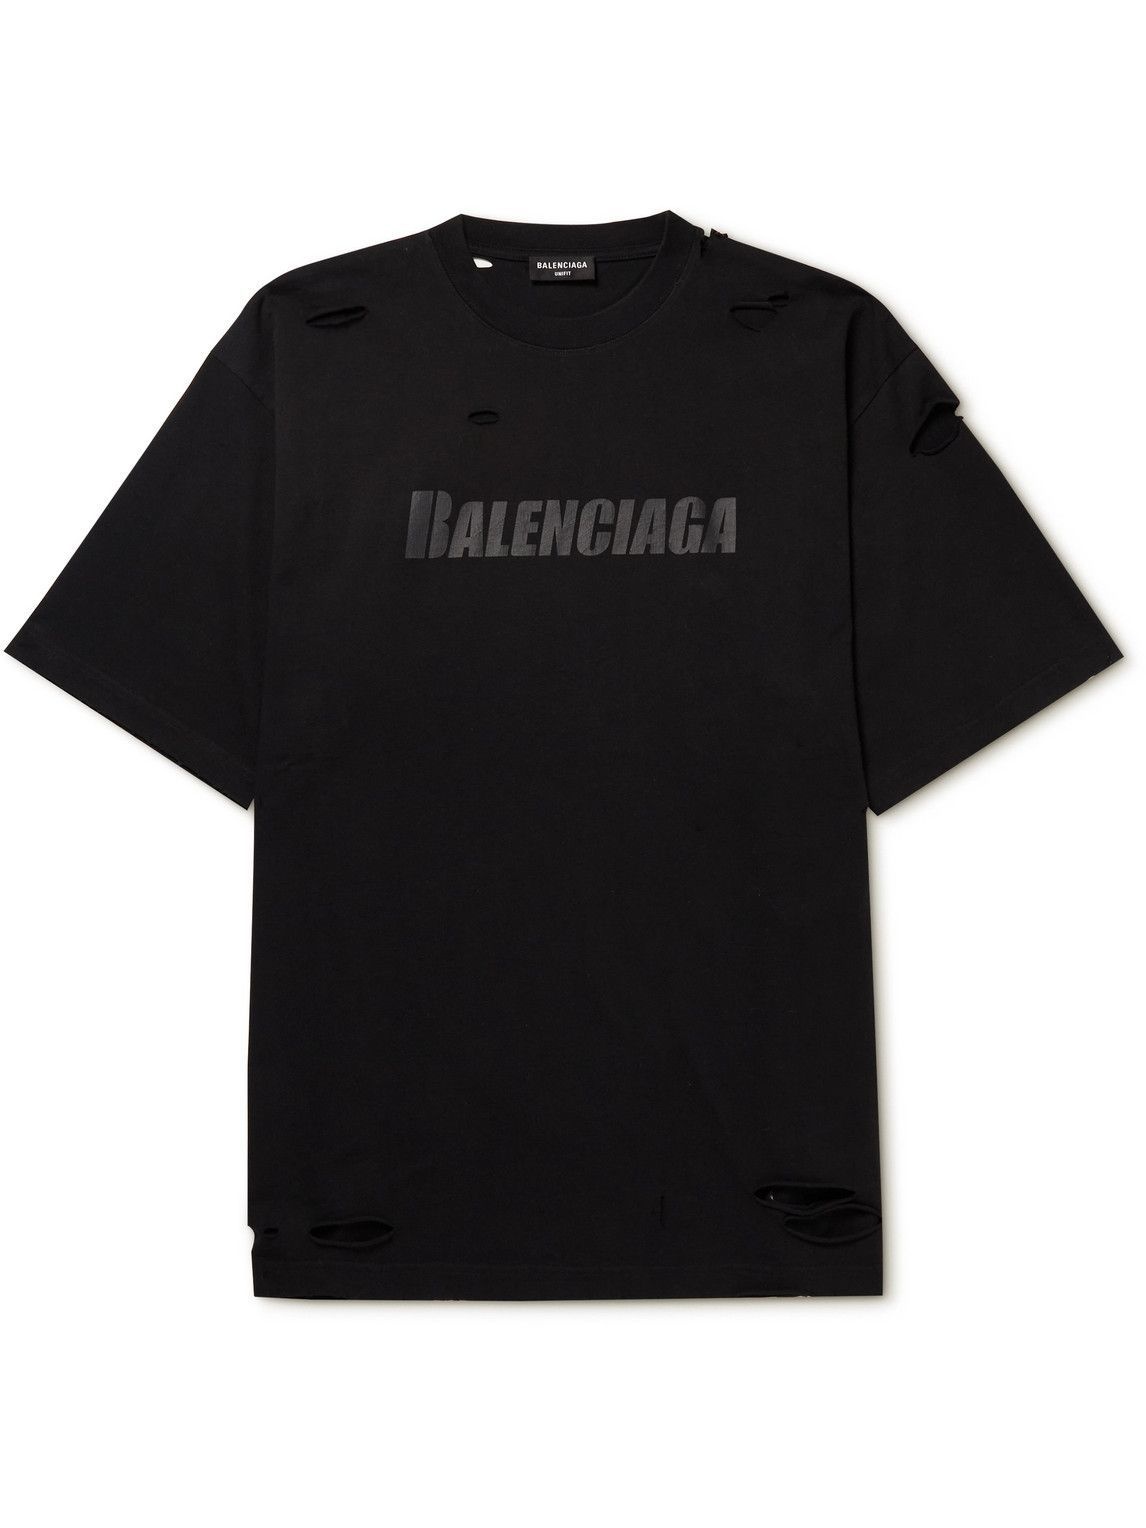 BALENCIAGA  Copyright Medium Fit TShirt Black  Anrosa Store